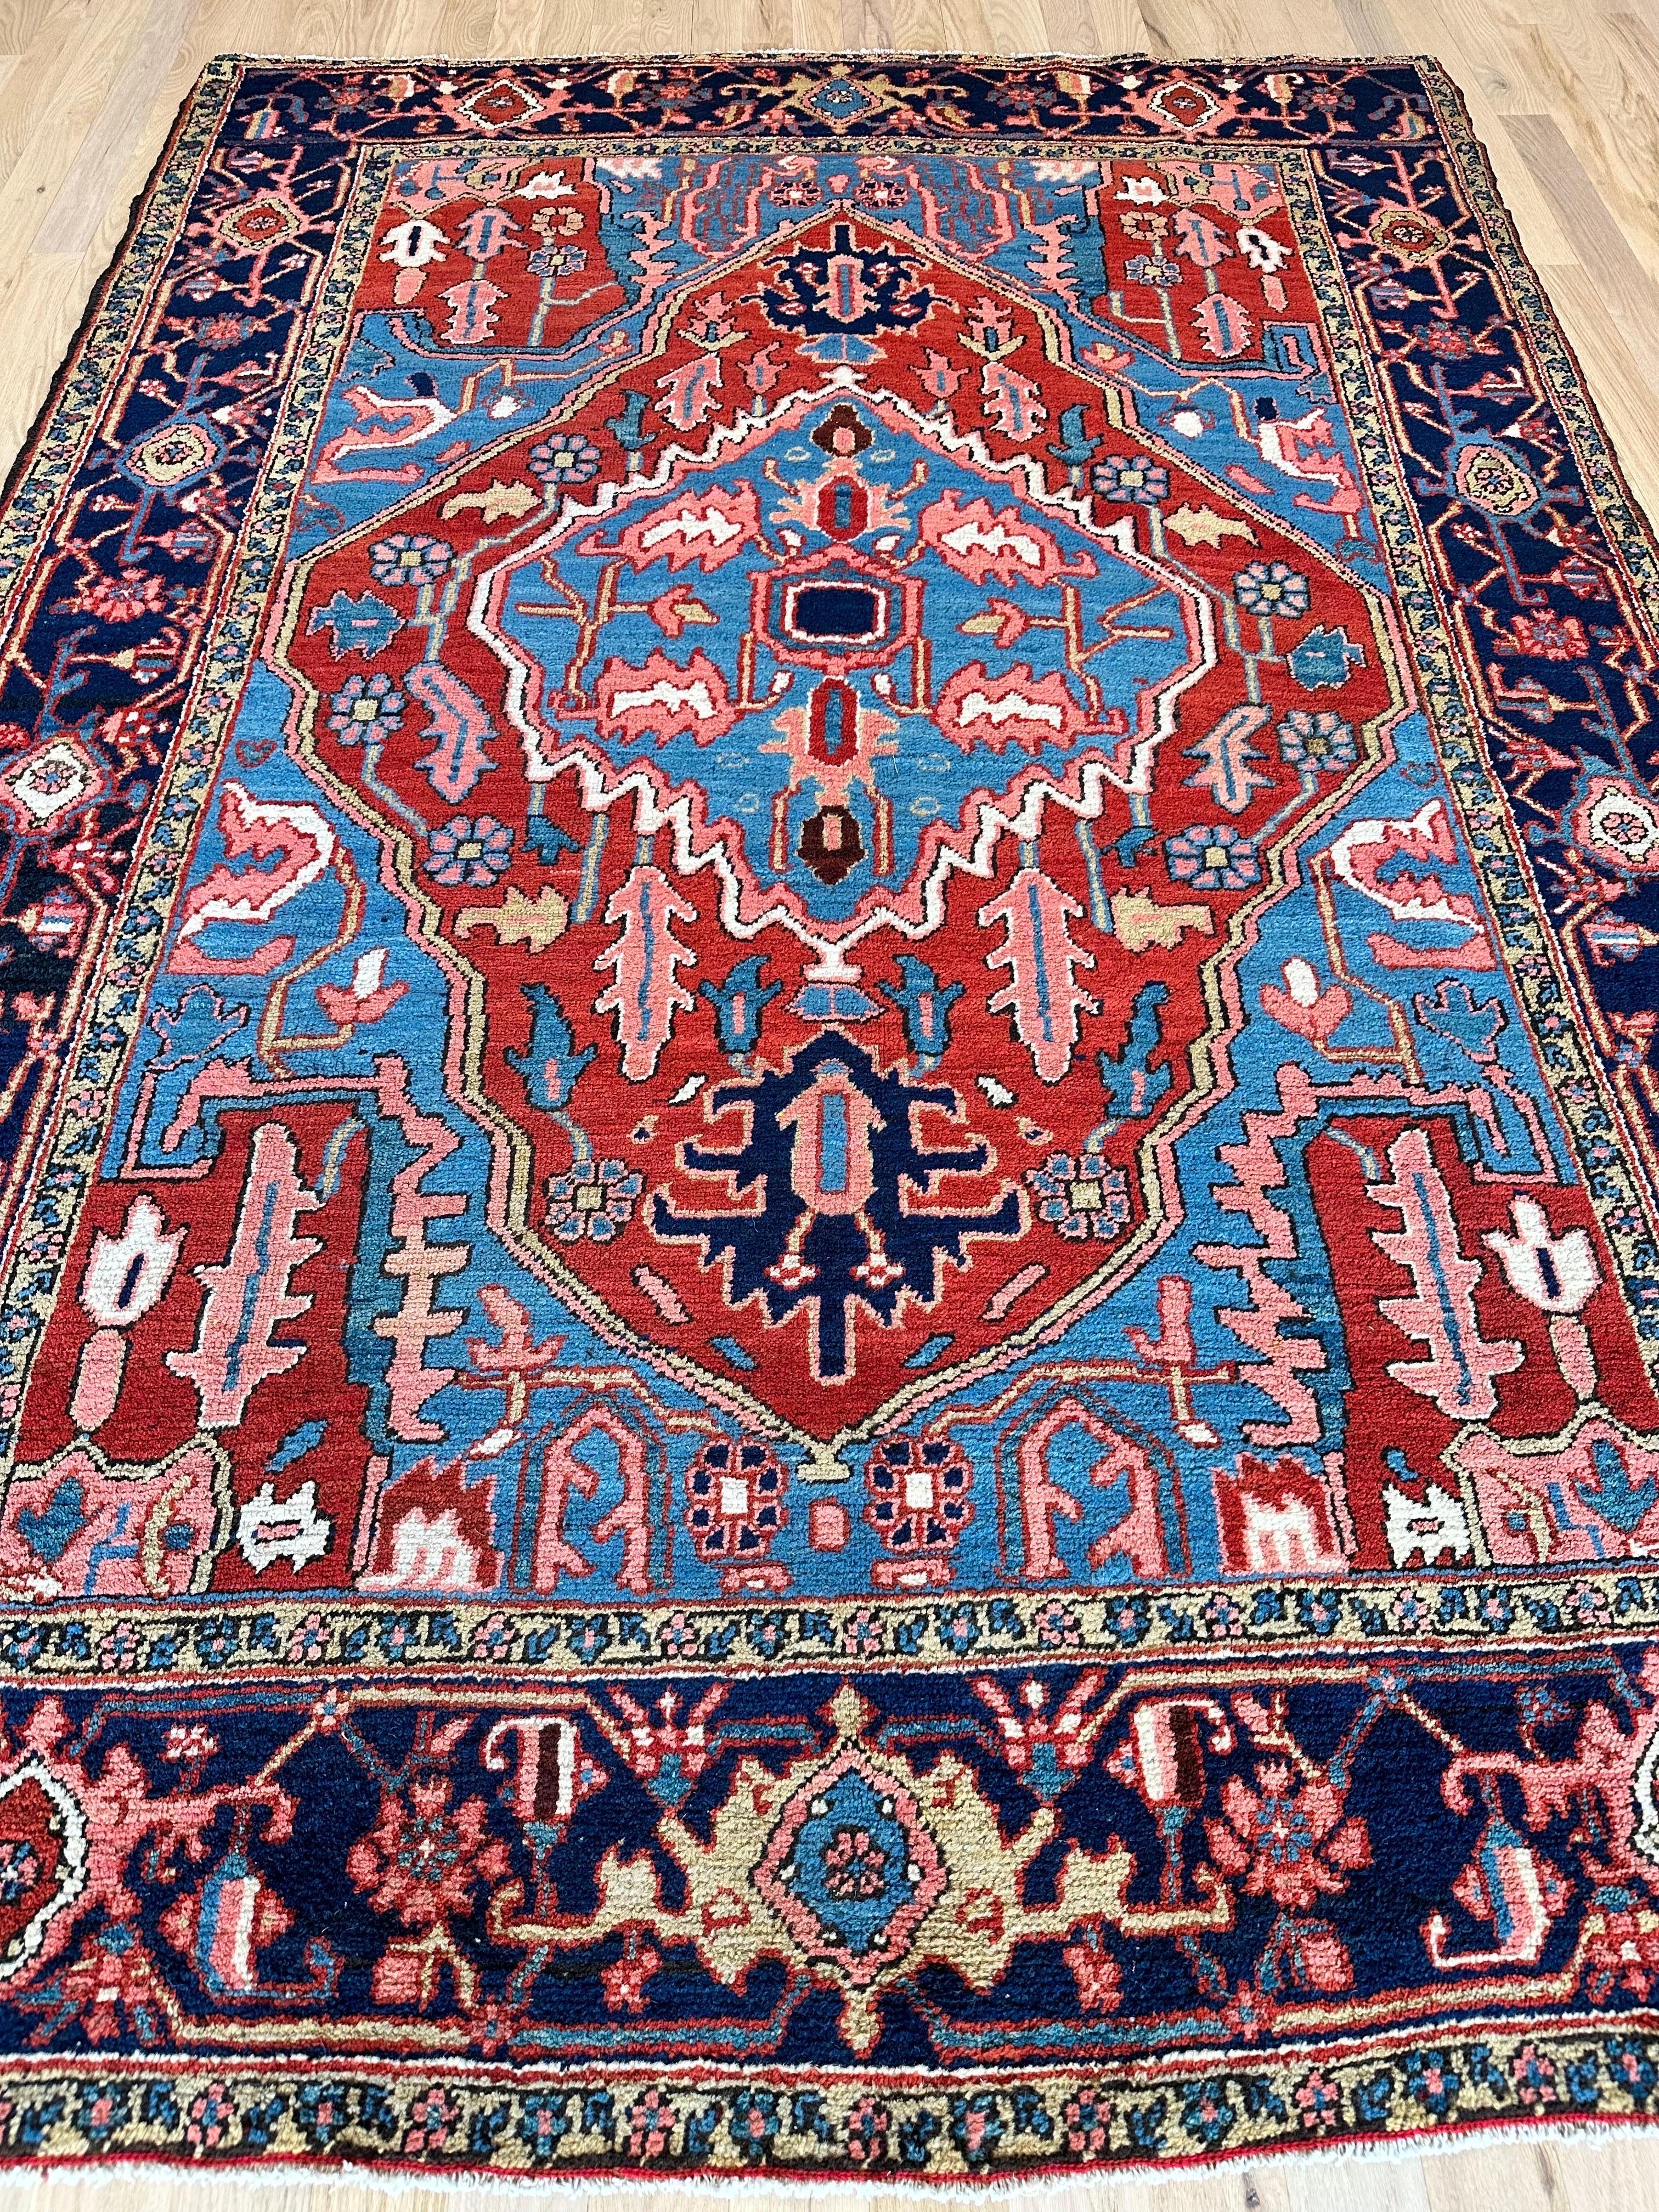 Antique Persian Serapi Carpet Handmade Wool Oriental Rug, Red, Ivory, Light Blue For Sale 3